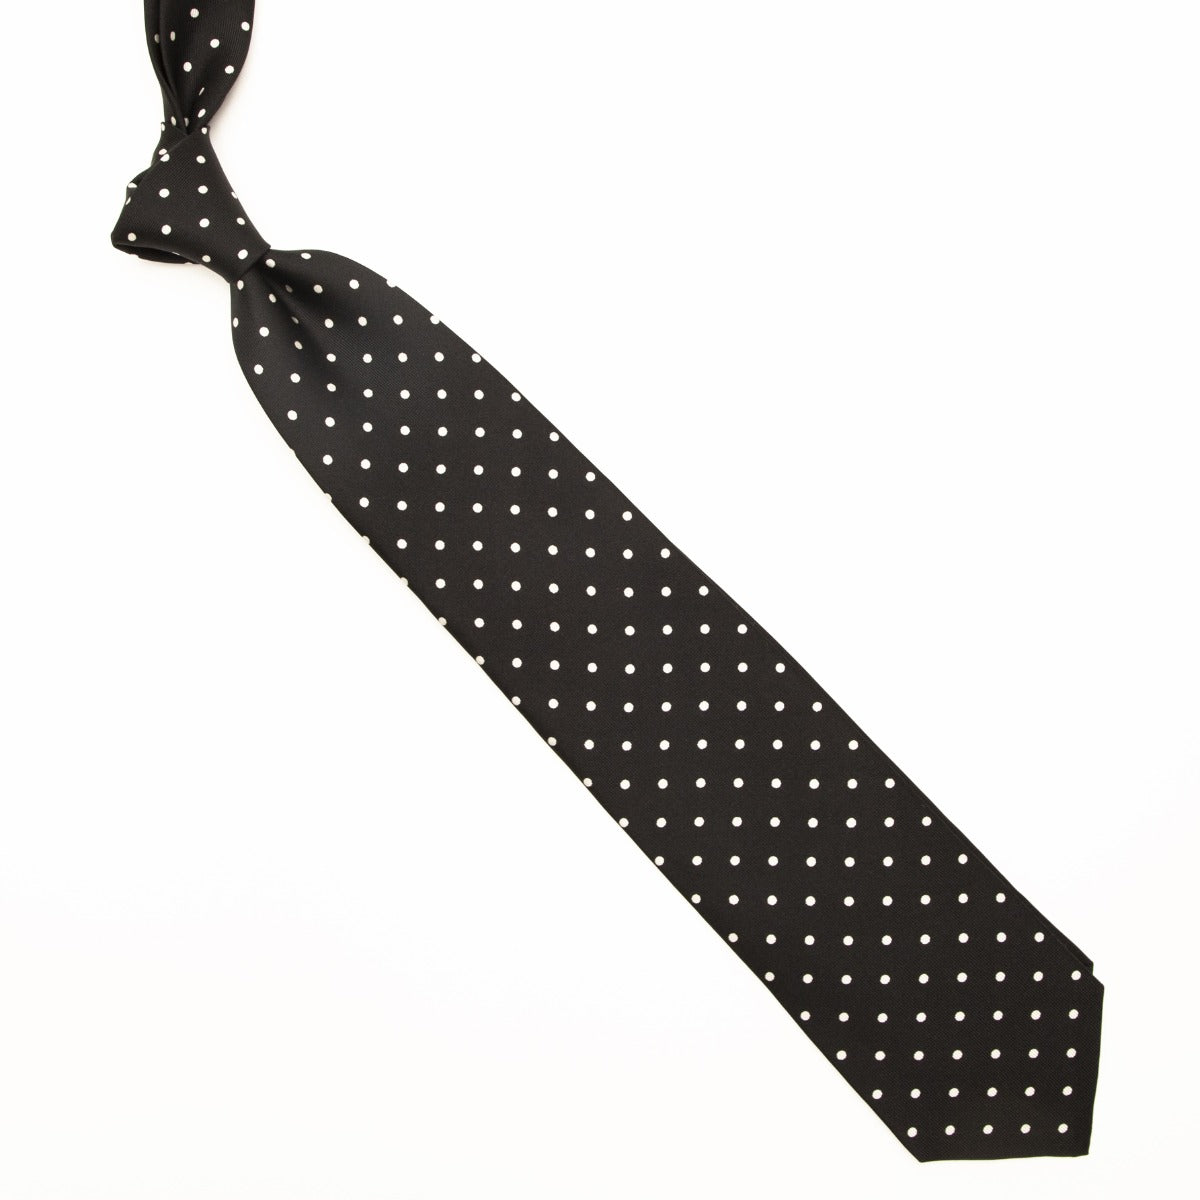 A handmade Sovereign Grade Black/White 36oz London Dot tie from KirbyAllison.com on a white background.